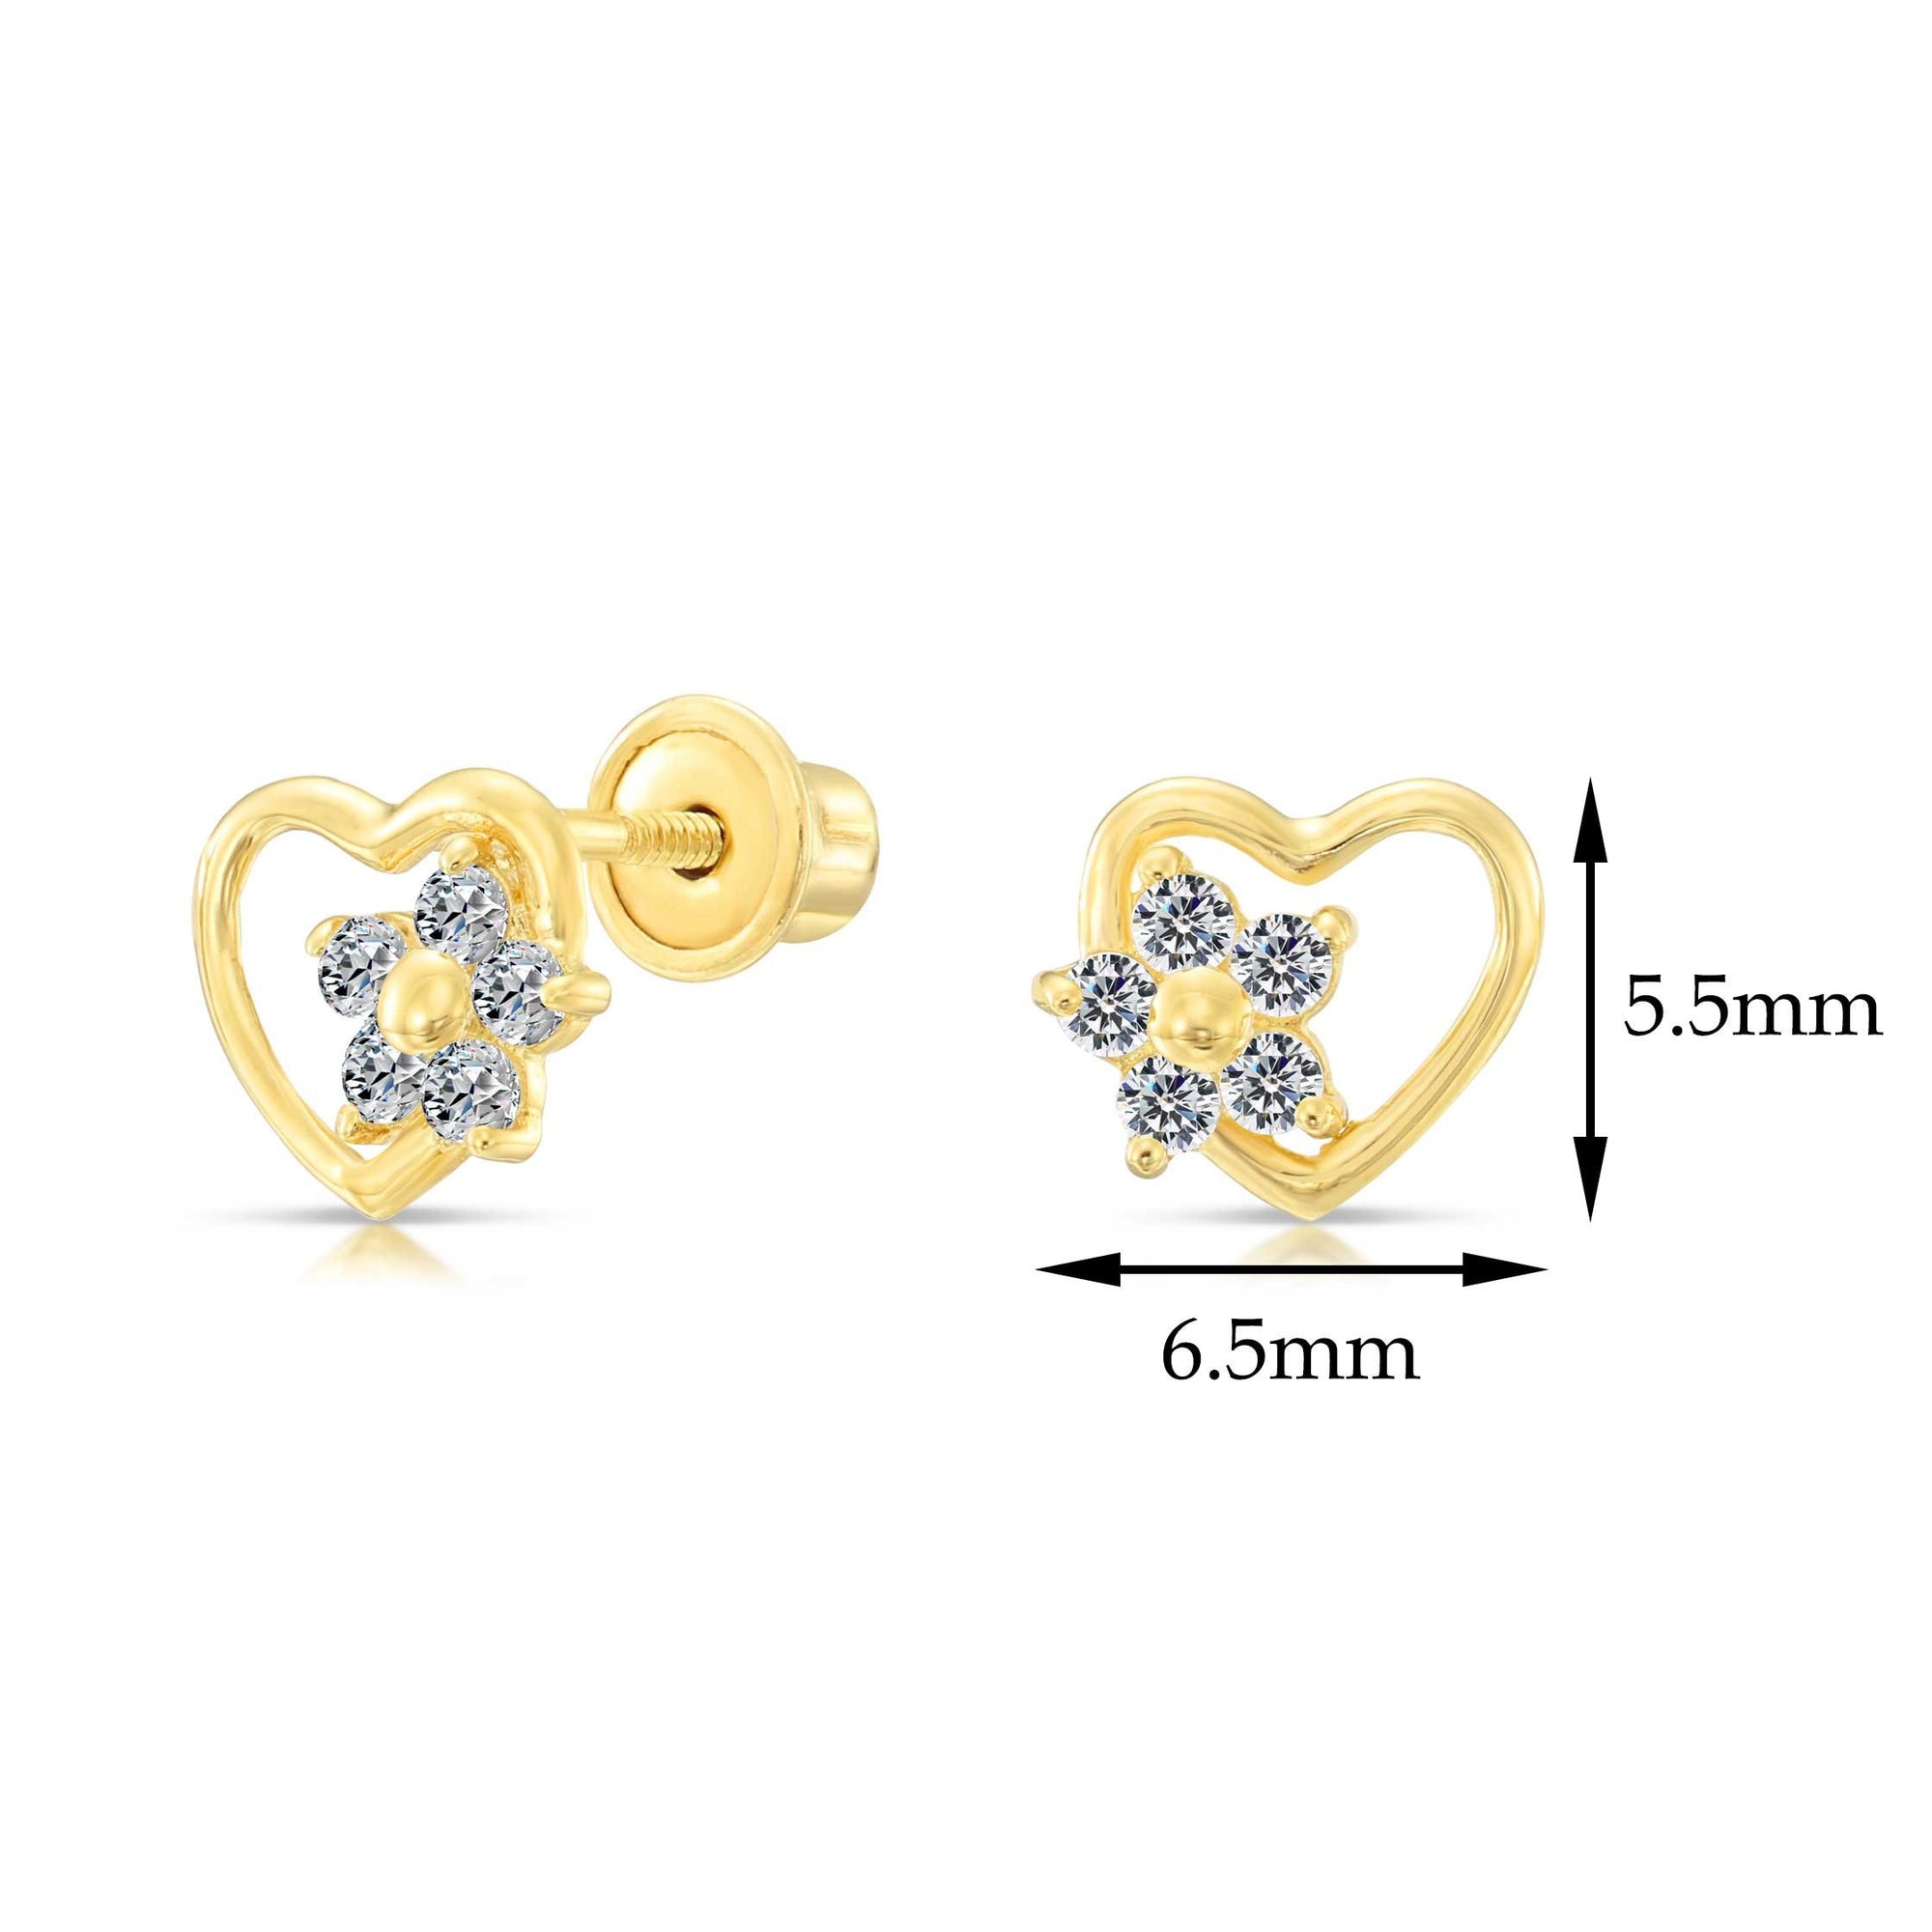 10K Yellow Gold Heart and Flower Stud Earrings